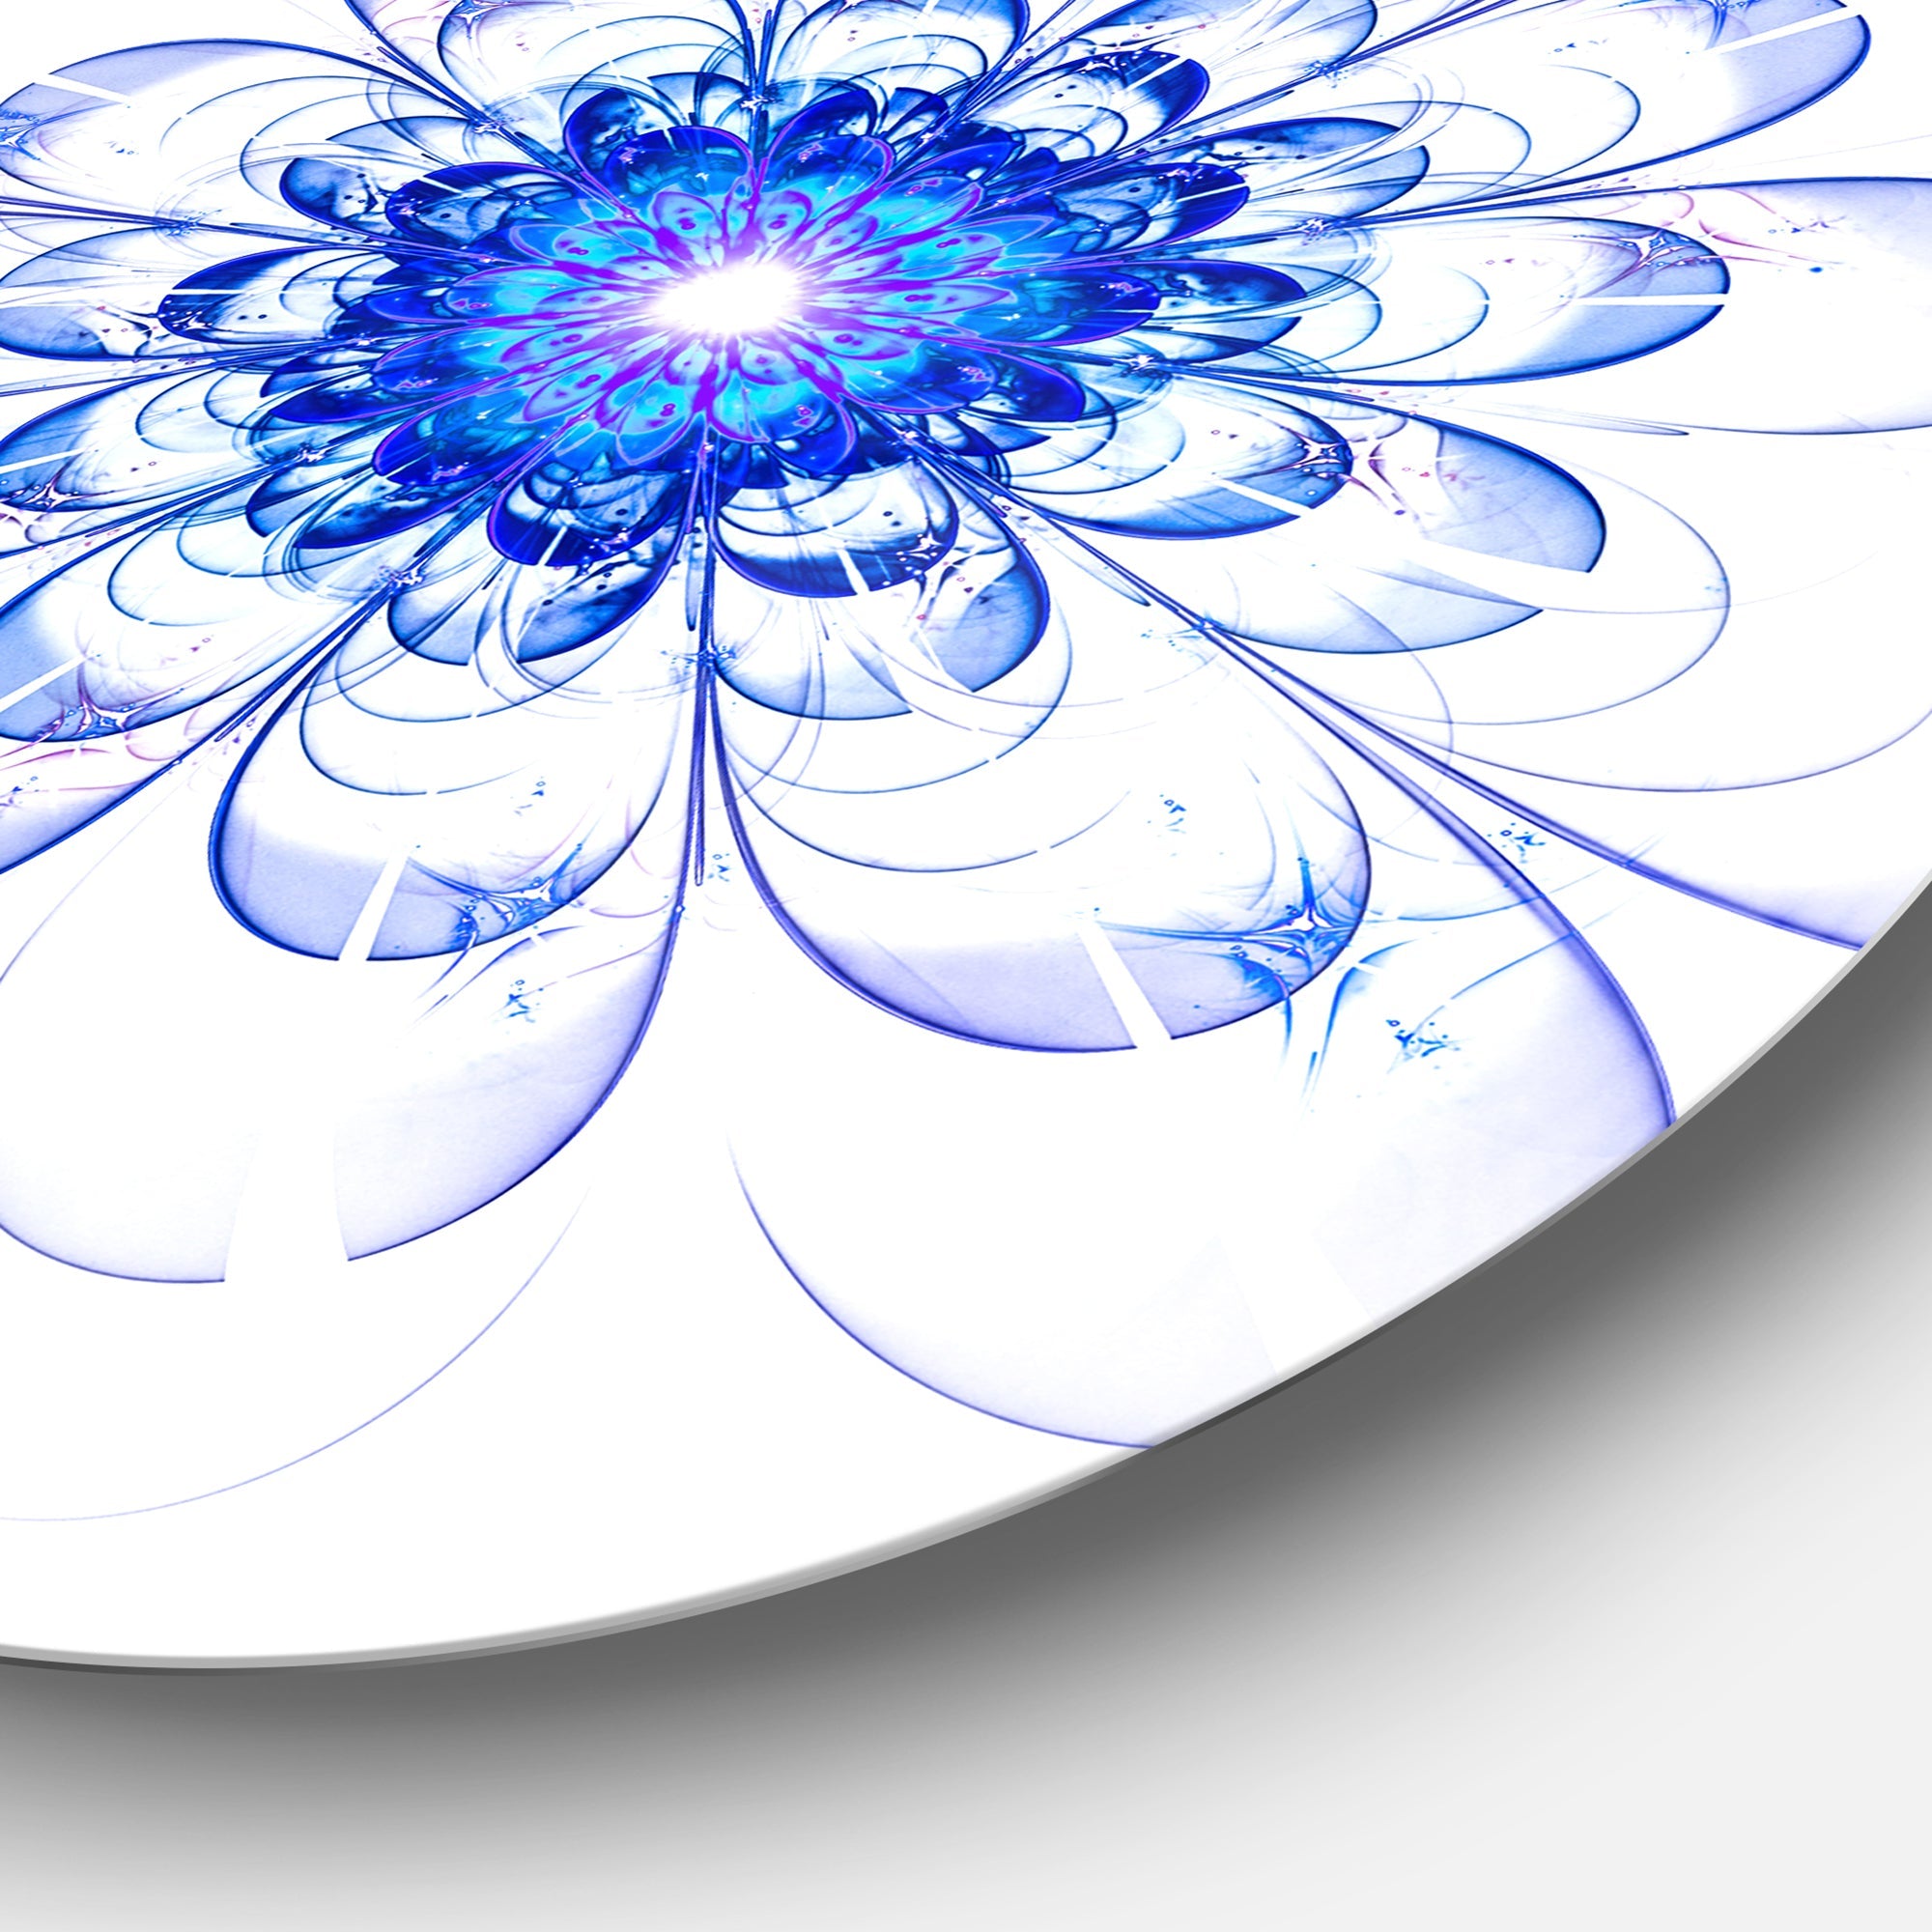 Blue Ideal Fractal Flower Design Floral Metal Circle Wall Art